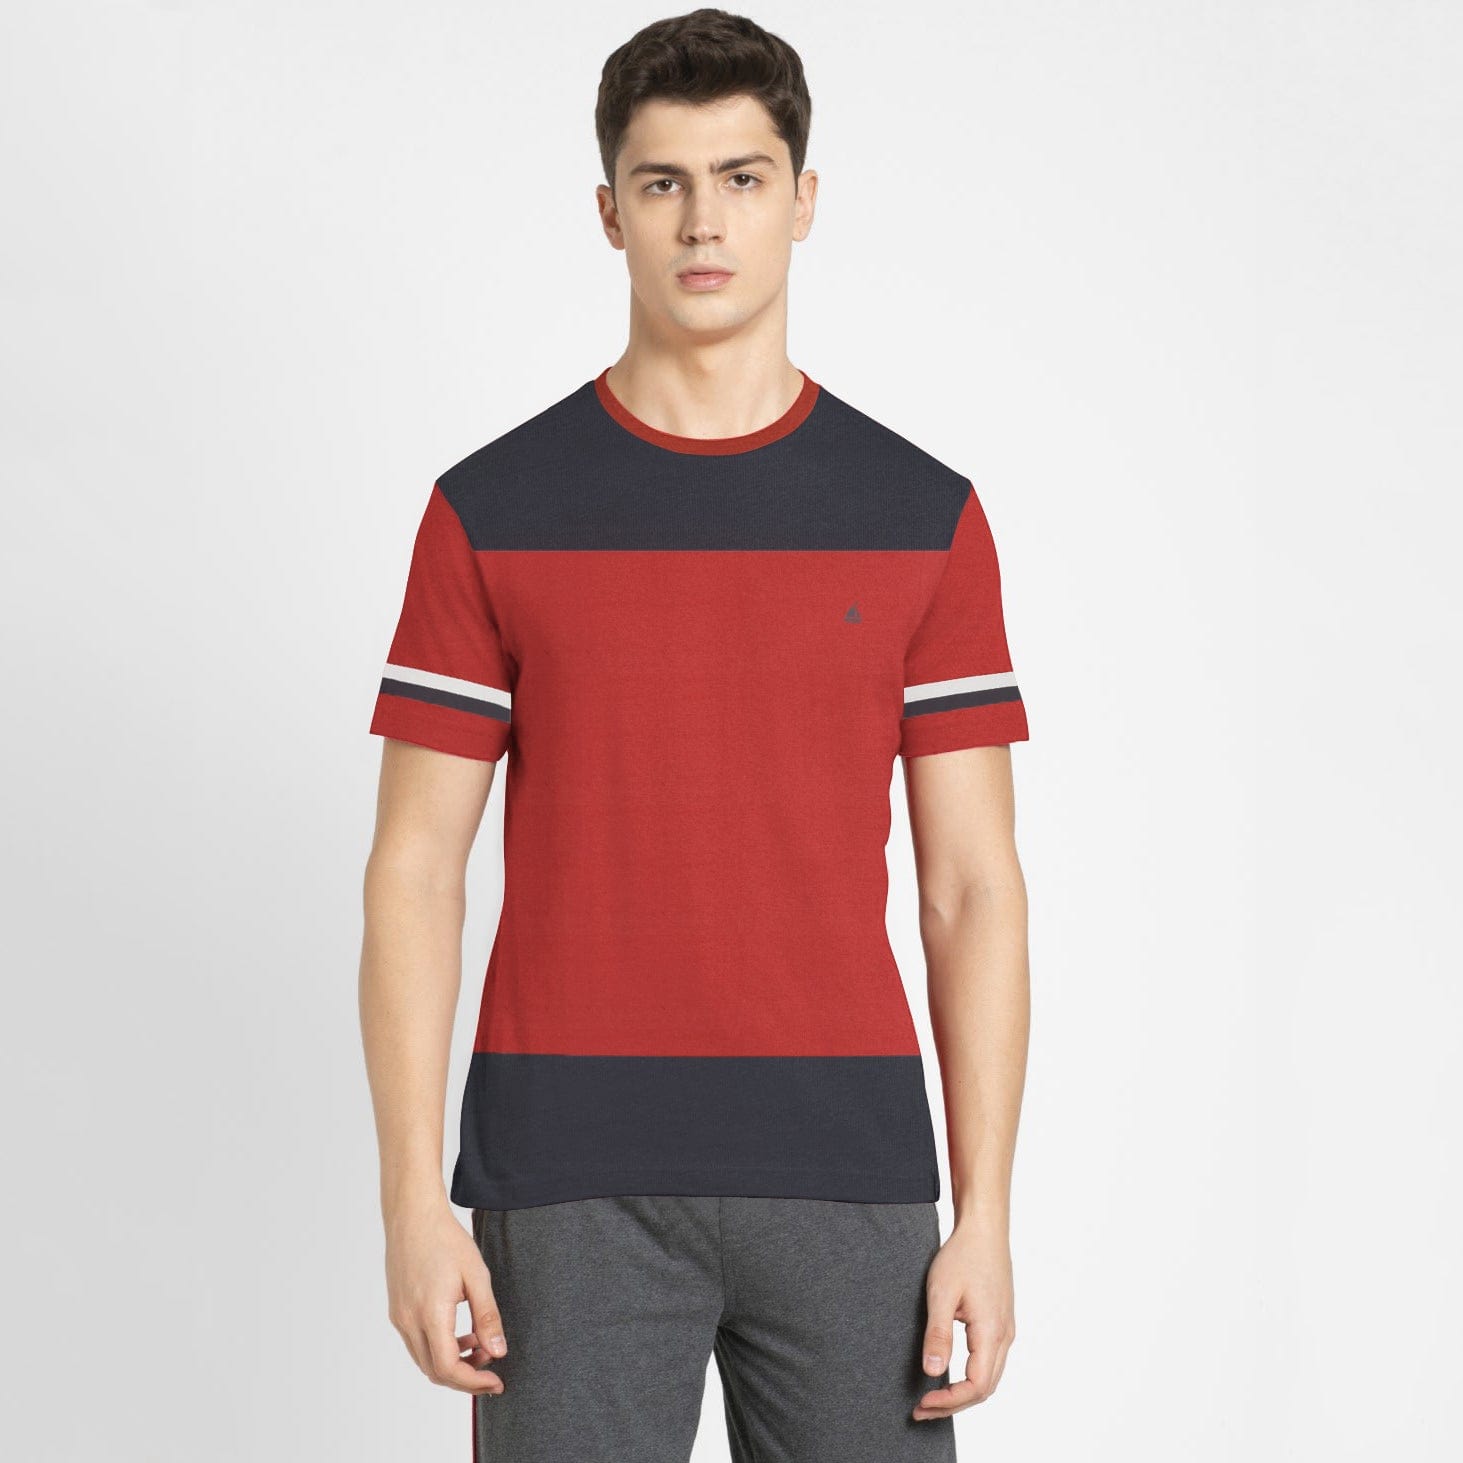 Stone Harbor Men's T-Shirt Red / S MEN'S PANELED LOGO T-SHIRT